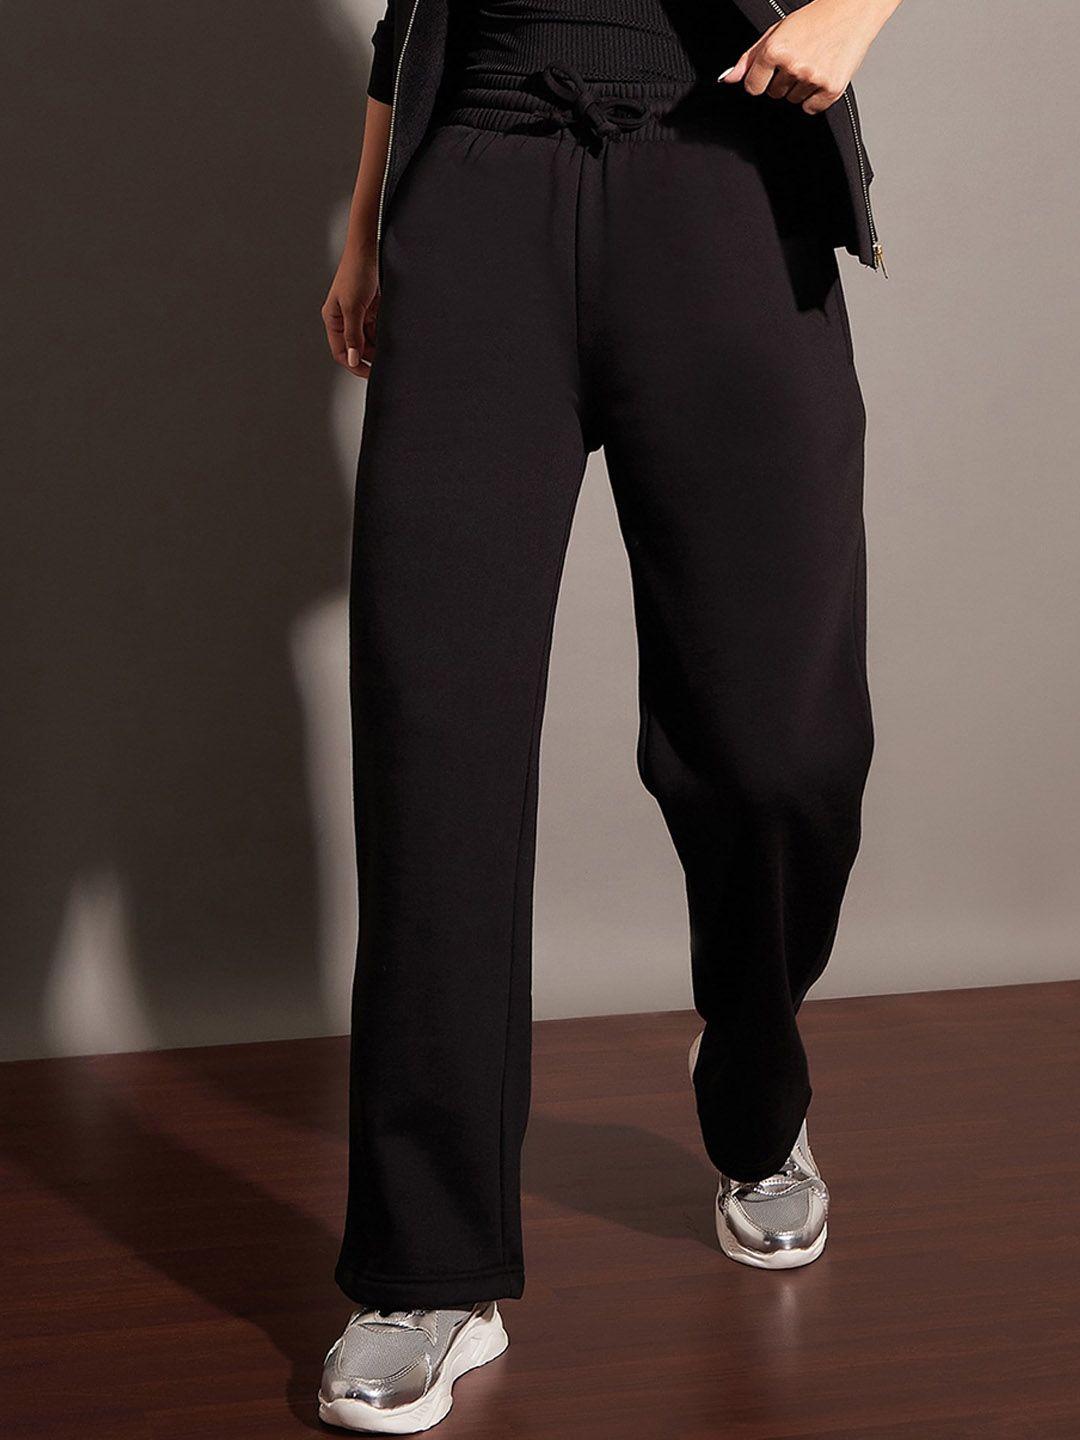 sassafras-women-black-relaxed-fit-mid-rise-fleece-track-pants